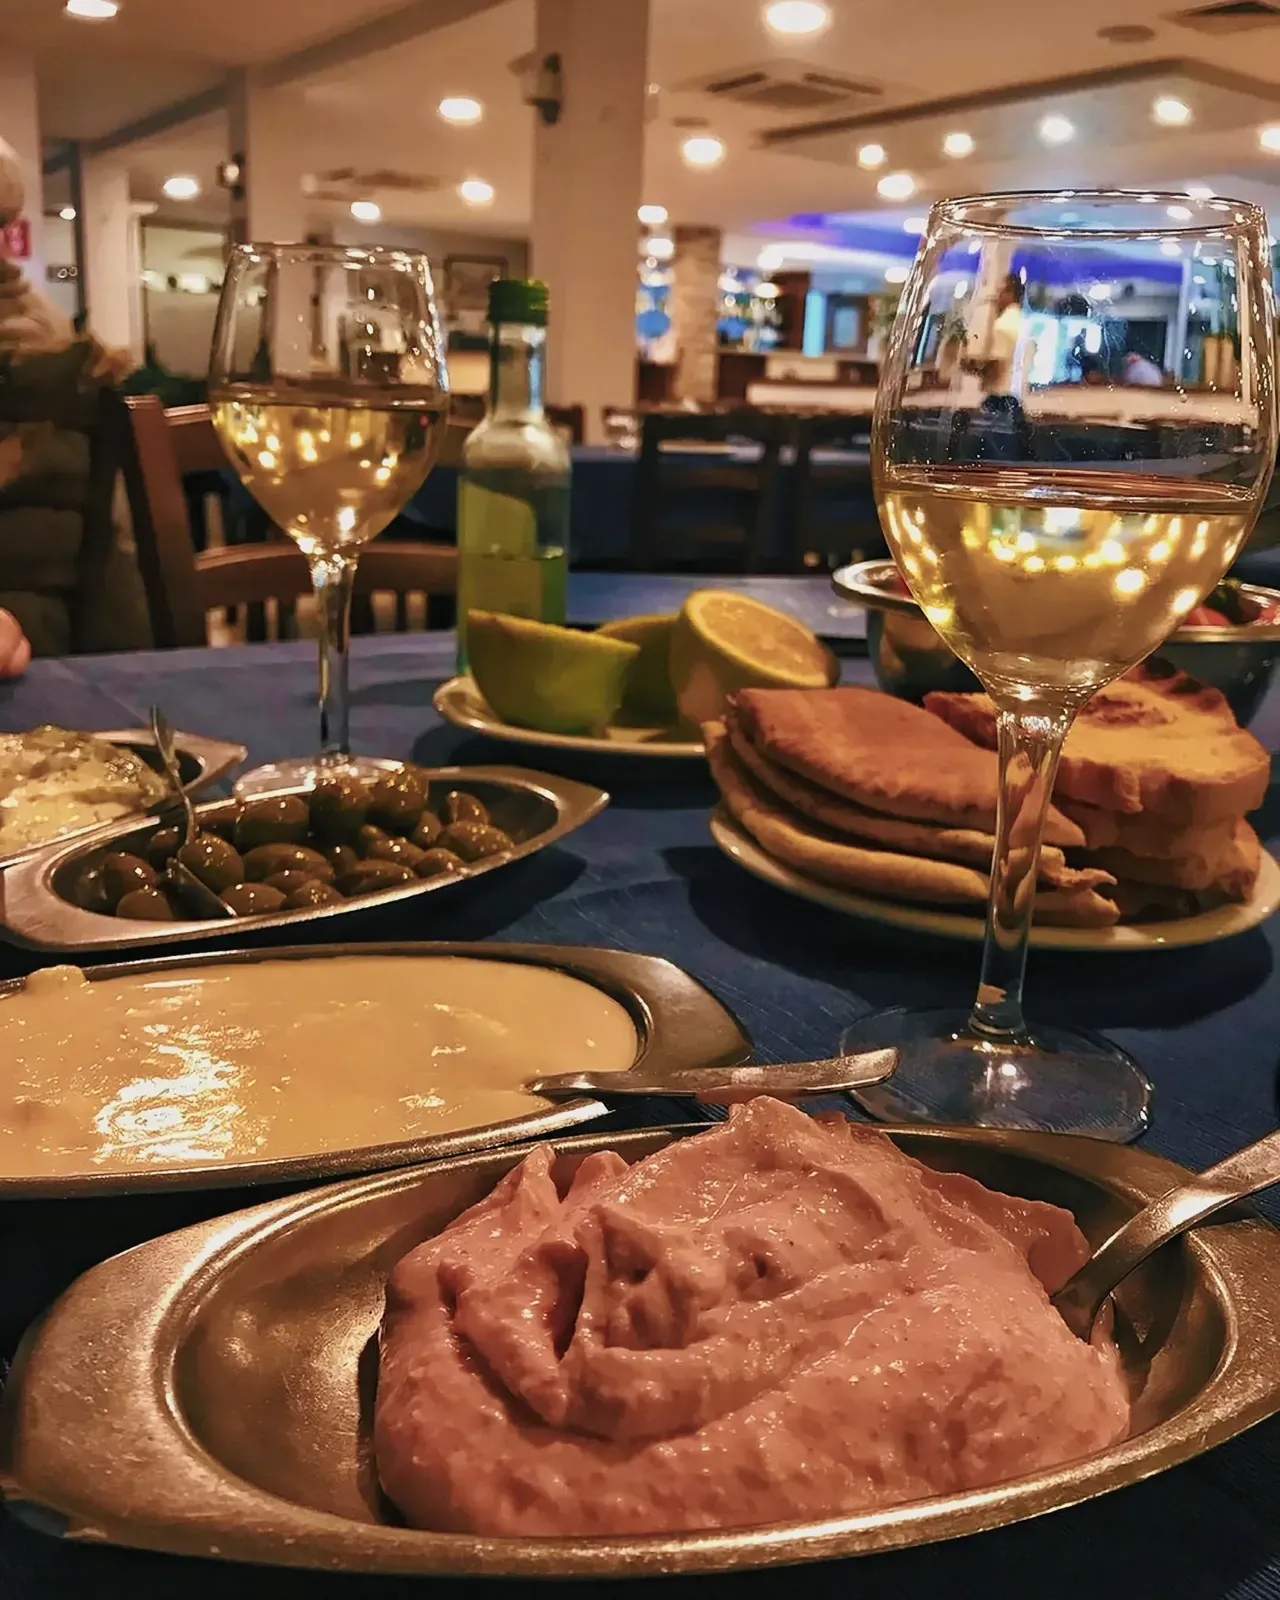 Elegant dining setting at Zephyros restaurant in Larnaca